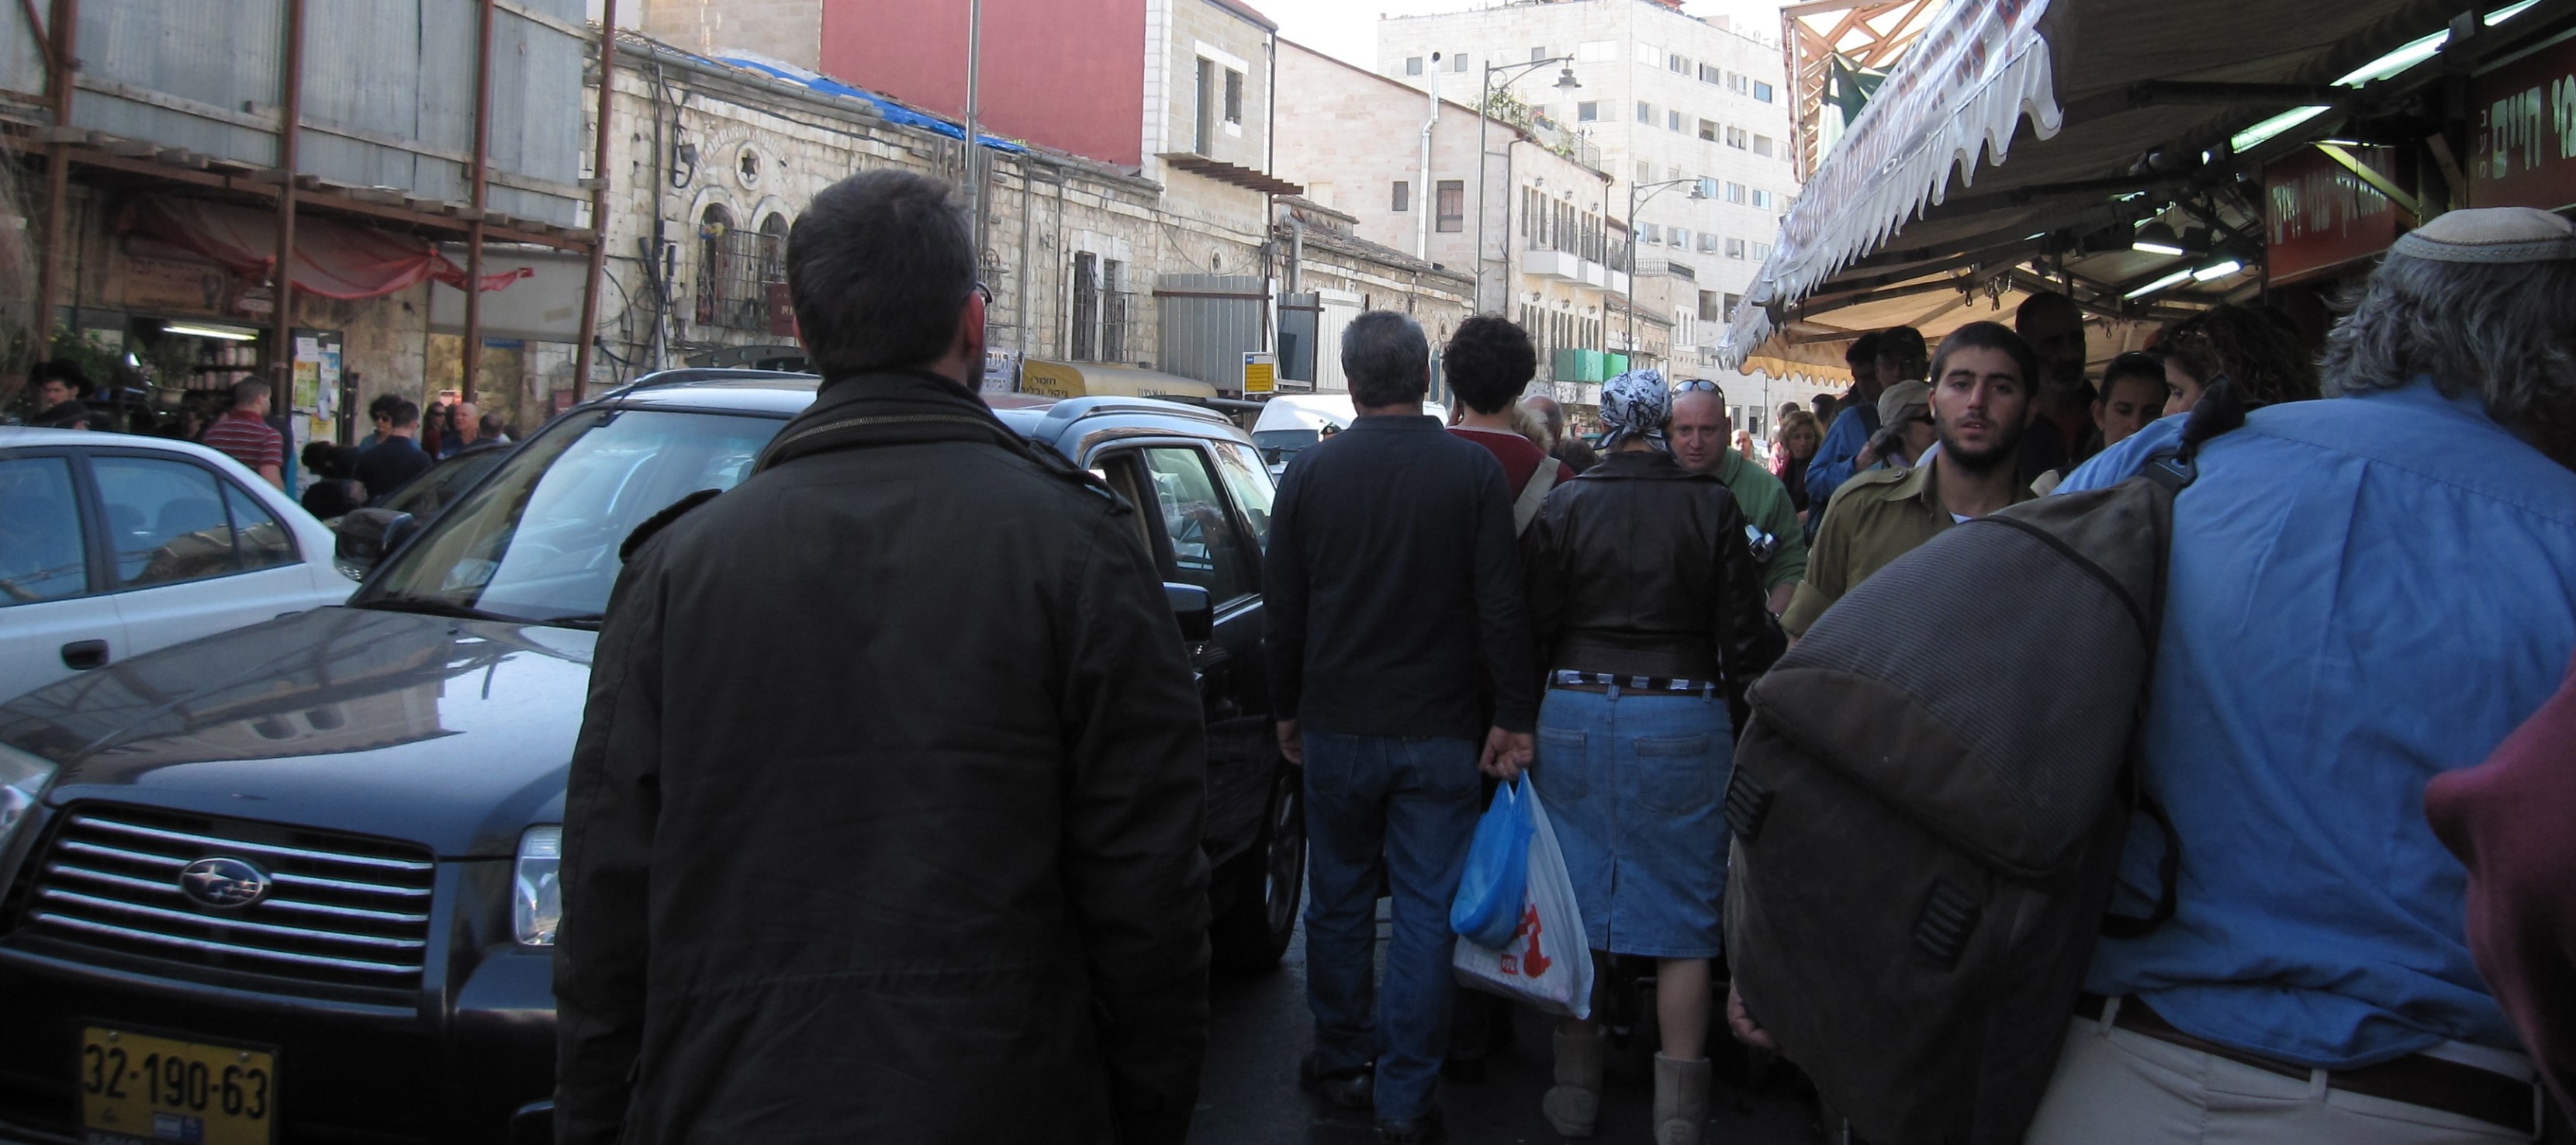 (image of Jerusalem street market)